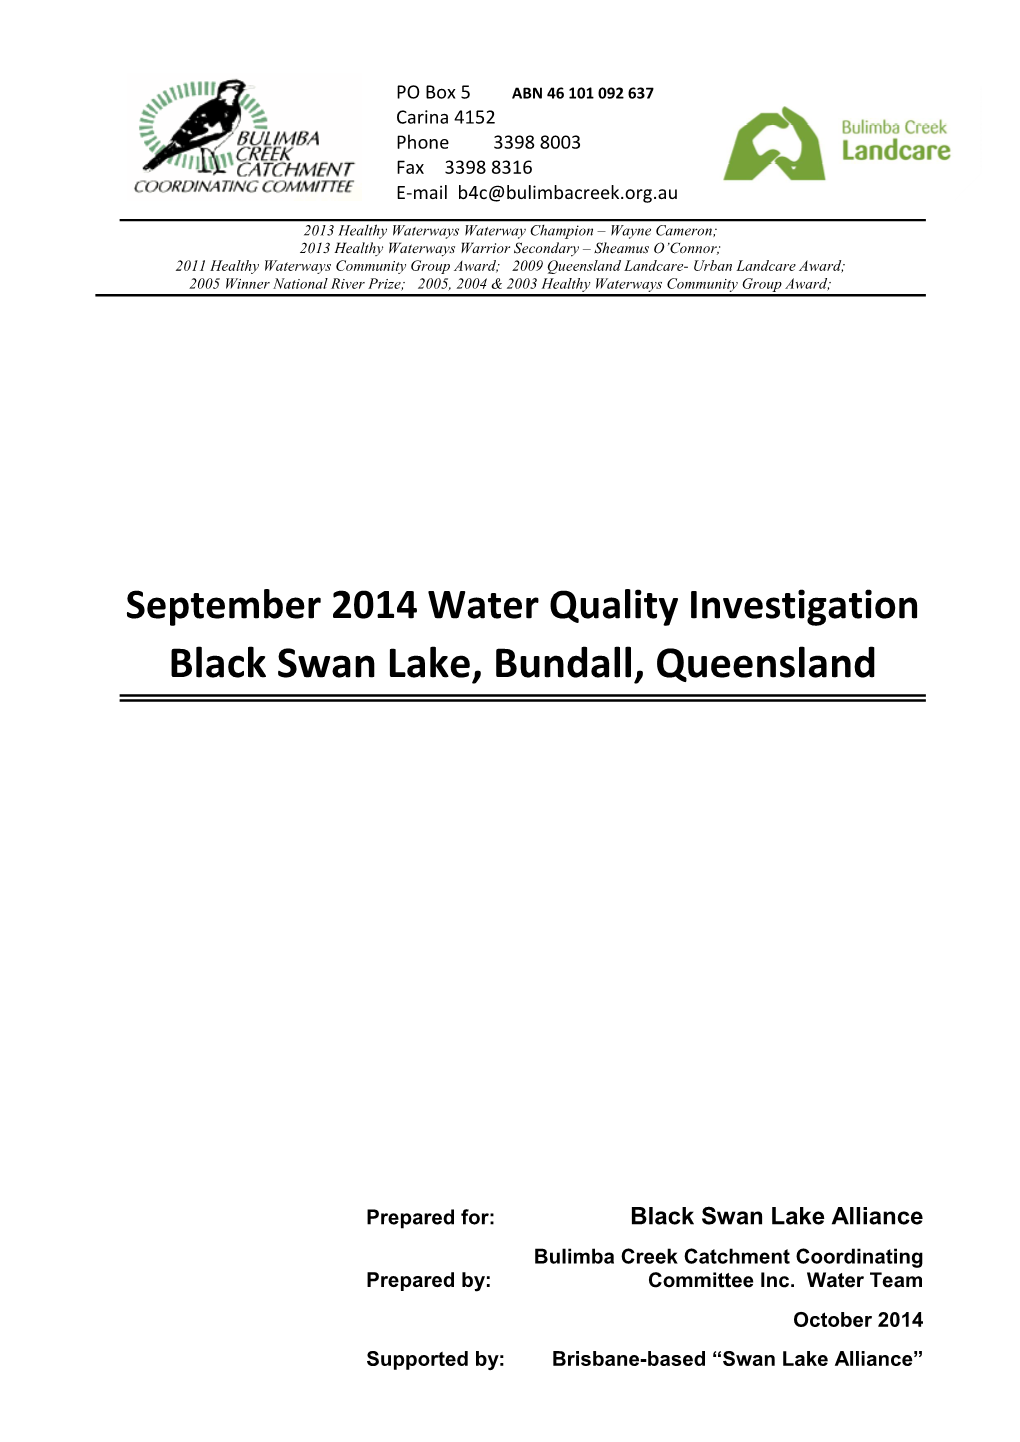 Black Swan Lake, Bundall, Queensland